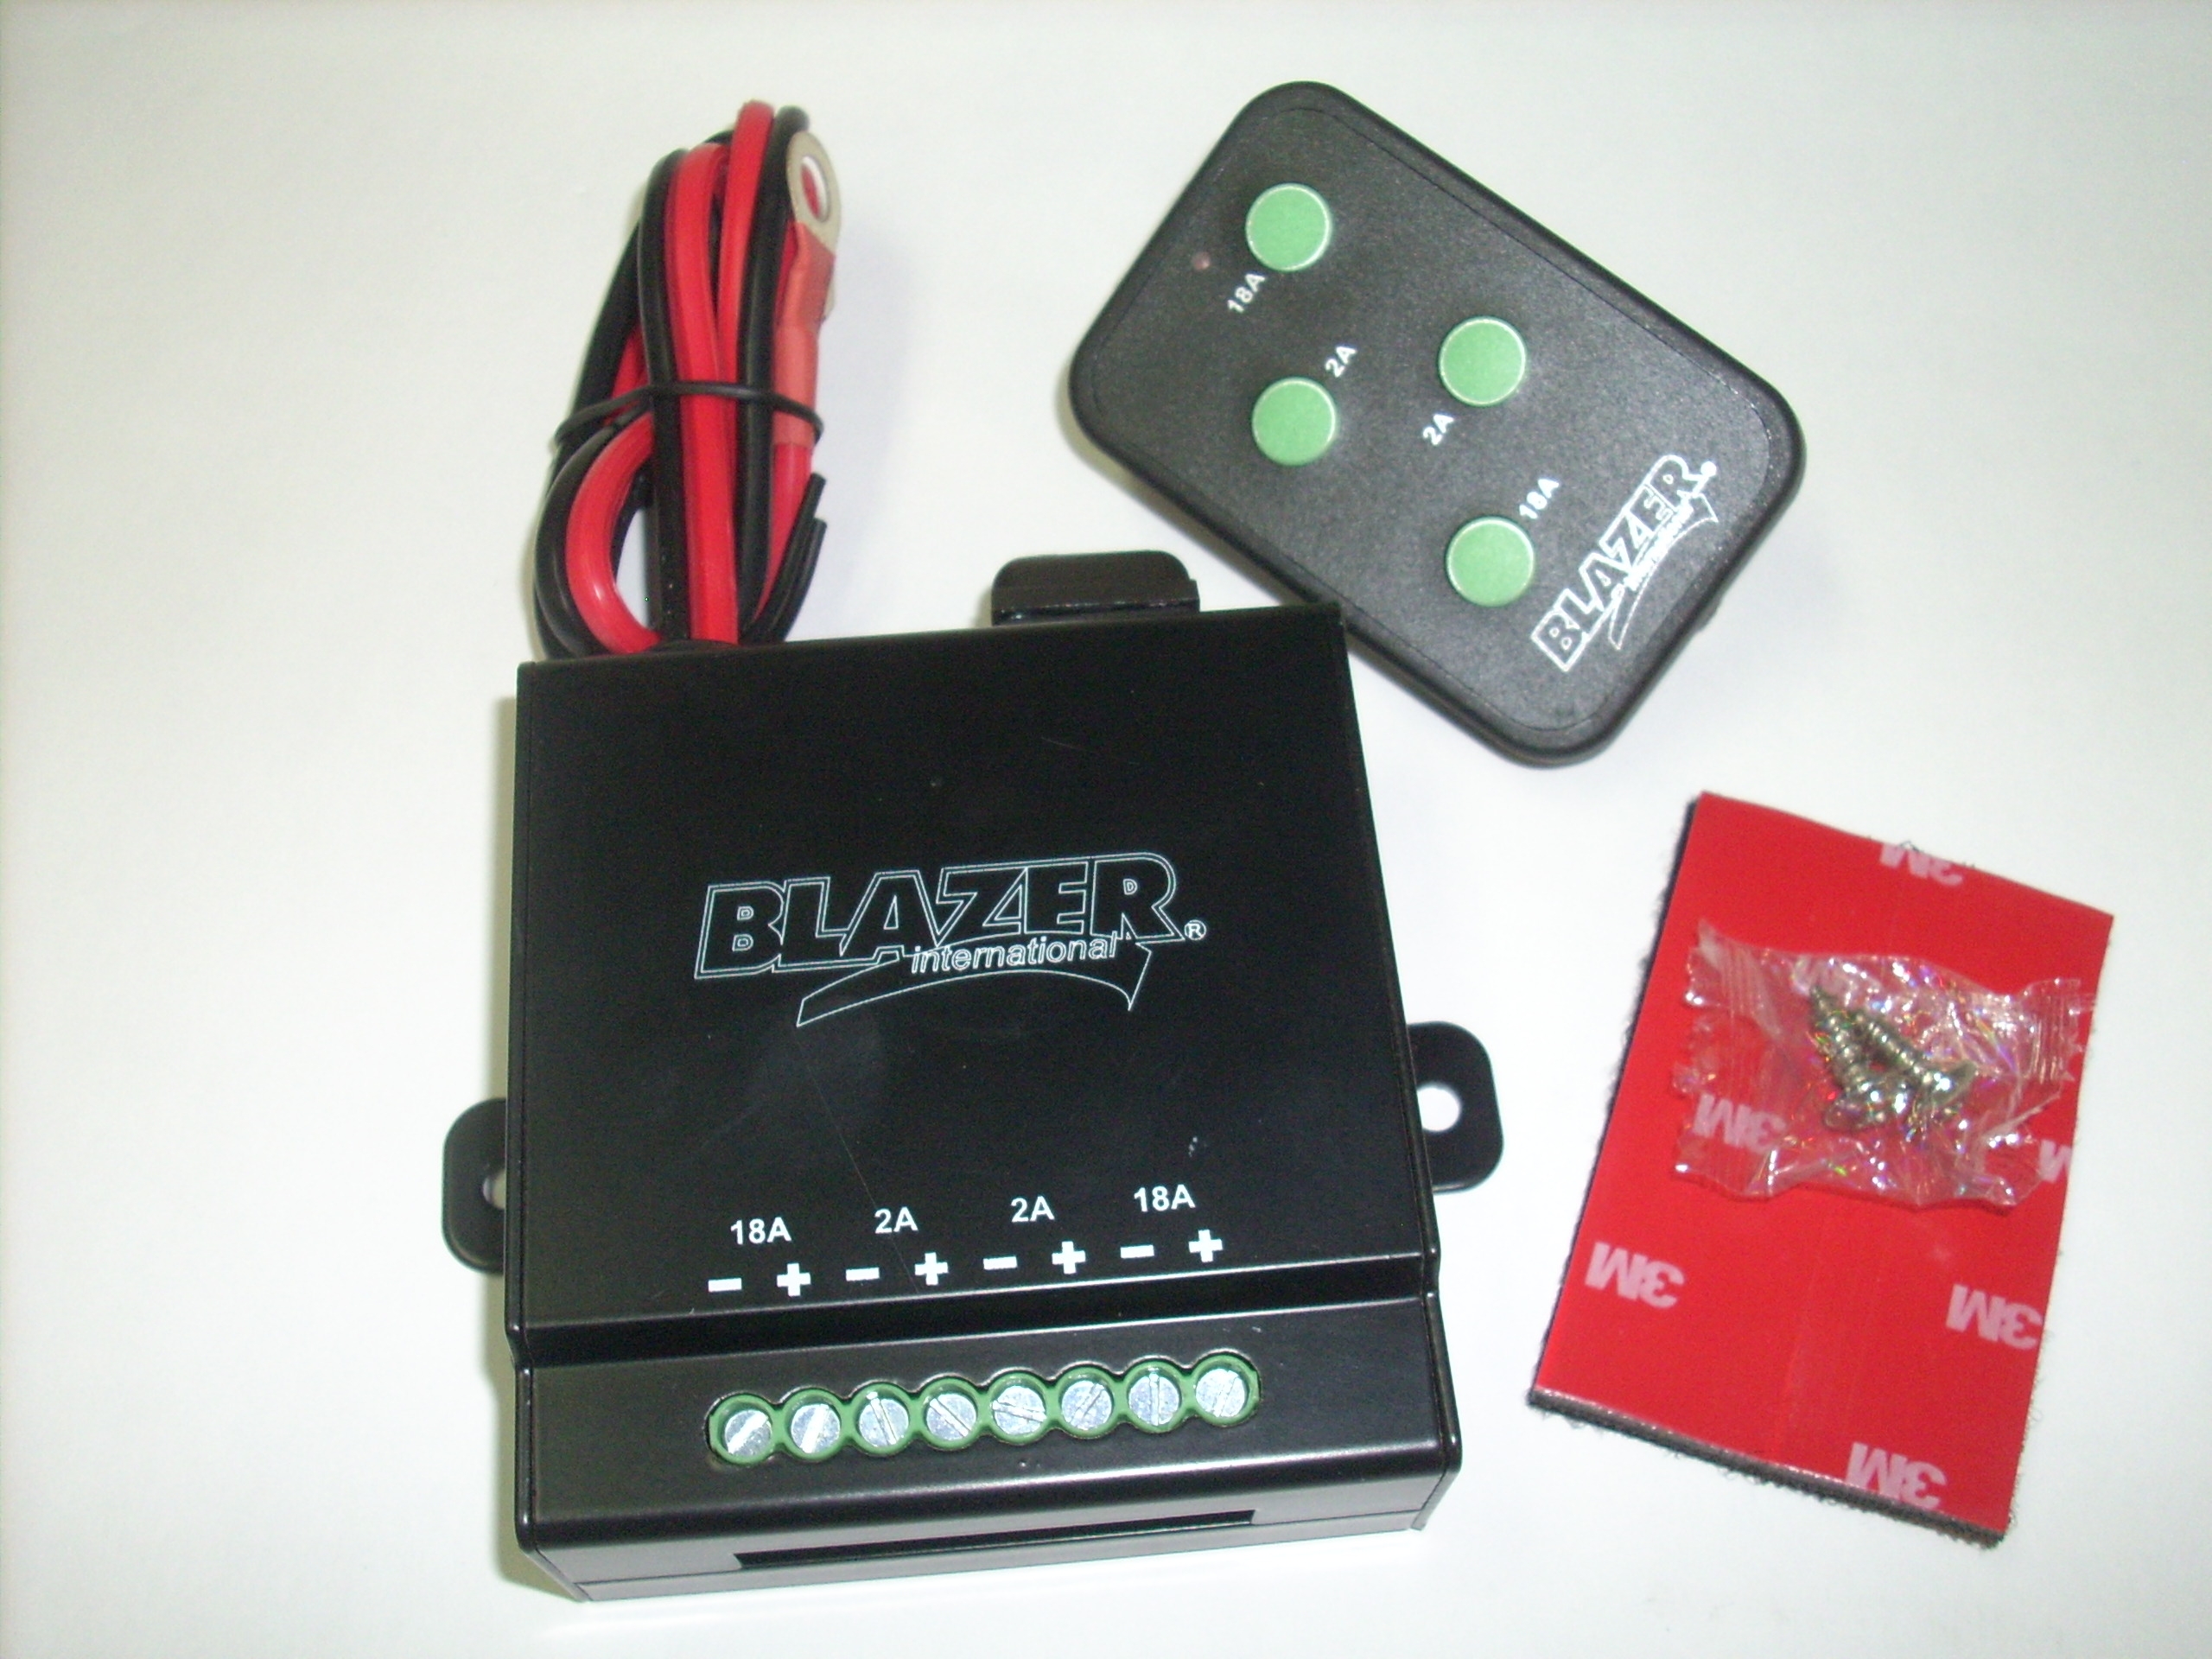 Blazer 4 Channel Wireless Light Management System w/Remote